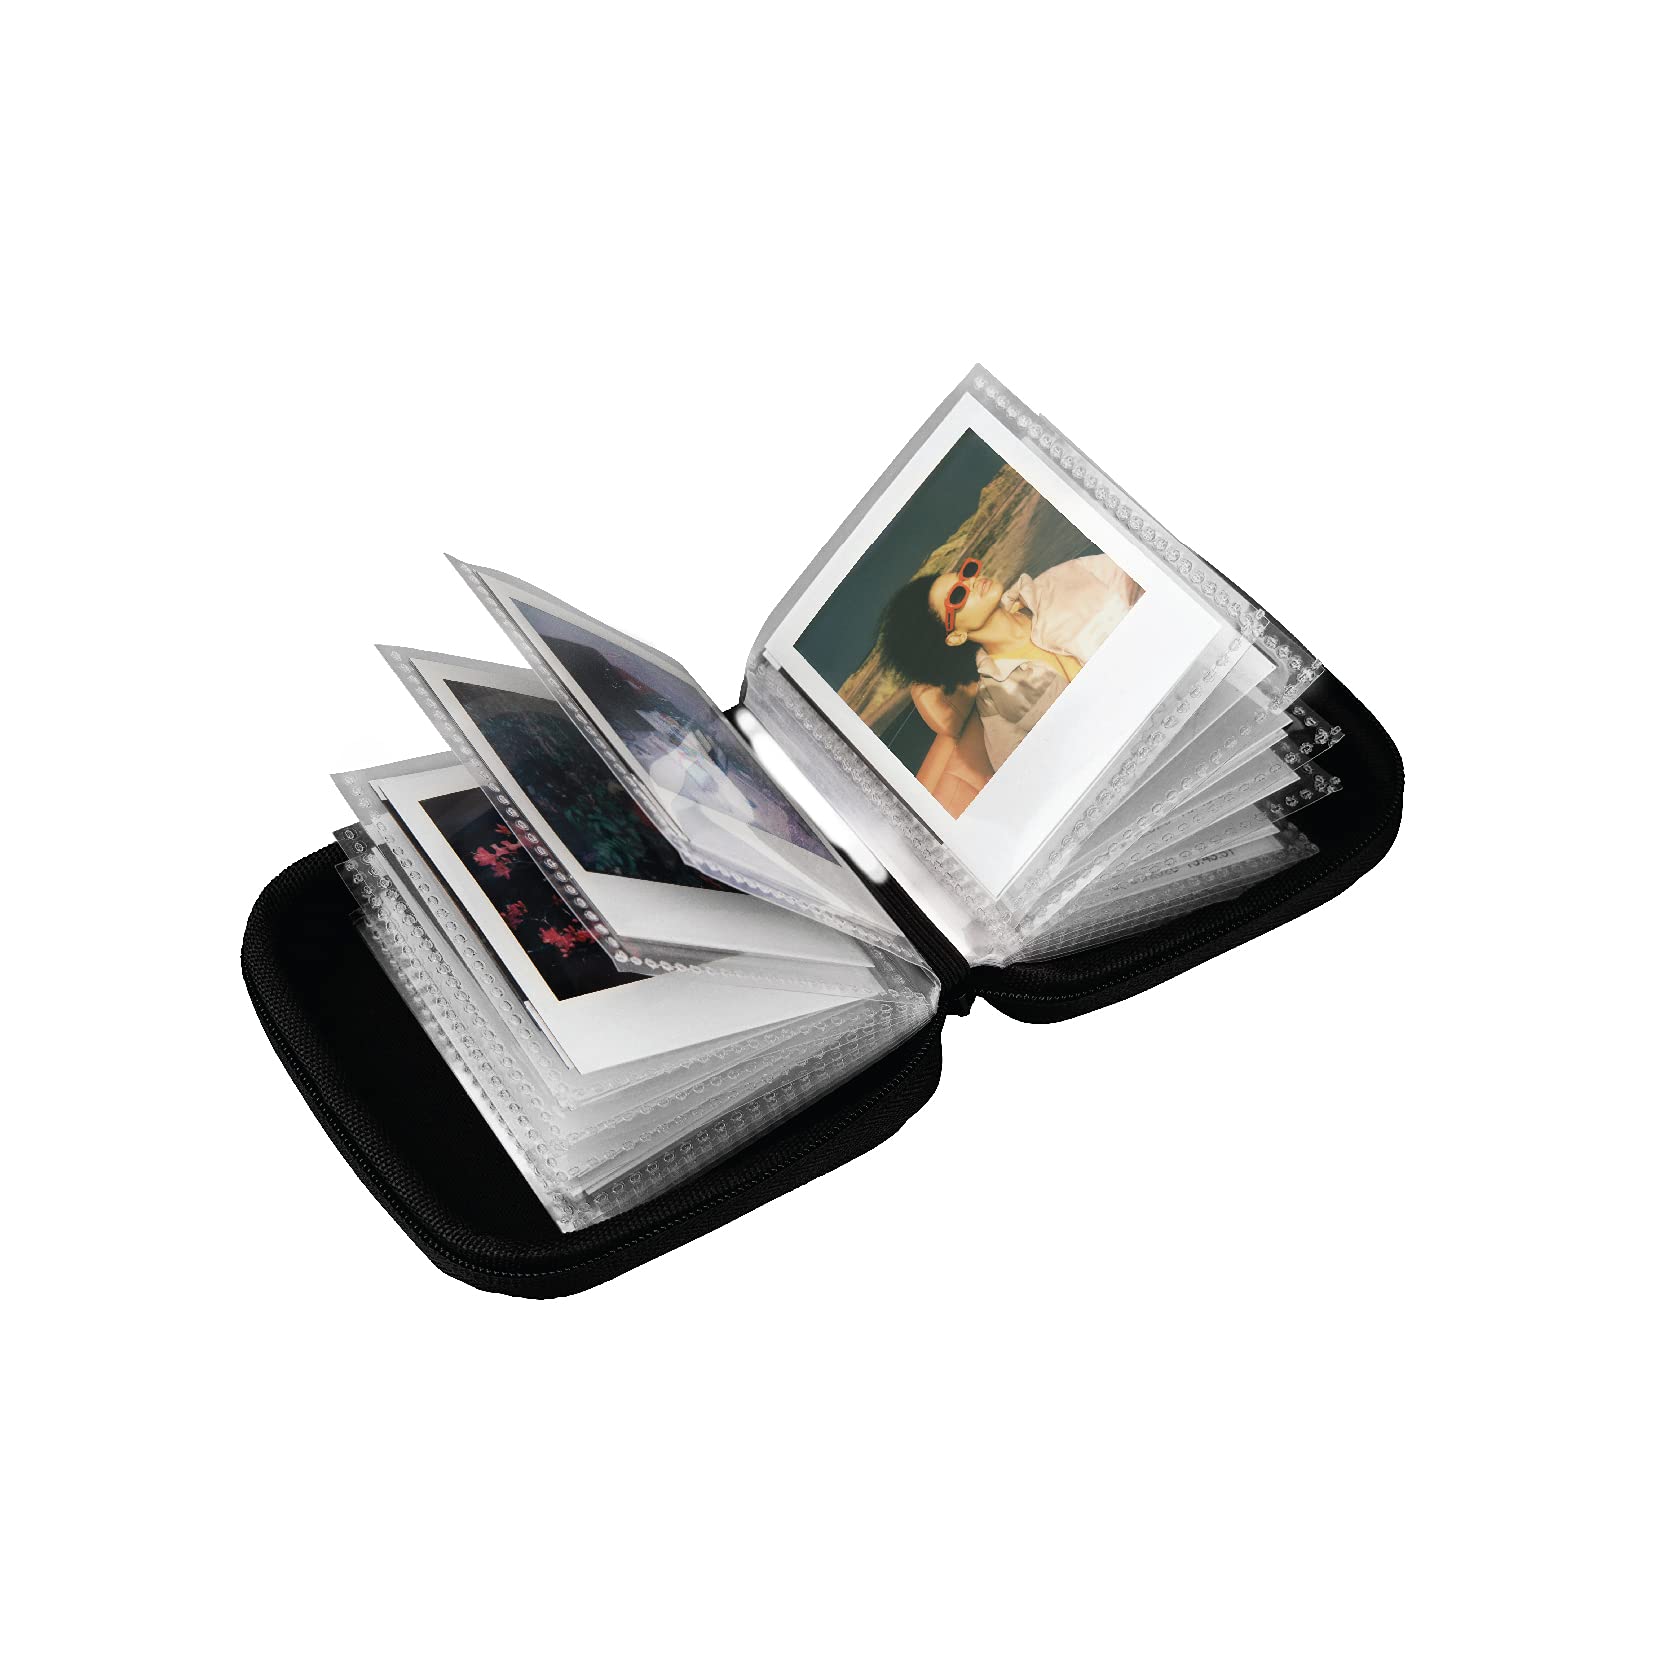 Polaroid Originals Polaroid Go Pocket Photo Album - Black - For Polaroid Go Format Photos - Displays 36 Go Photos (6164)